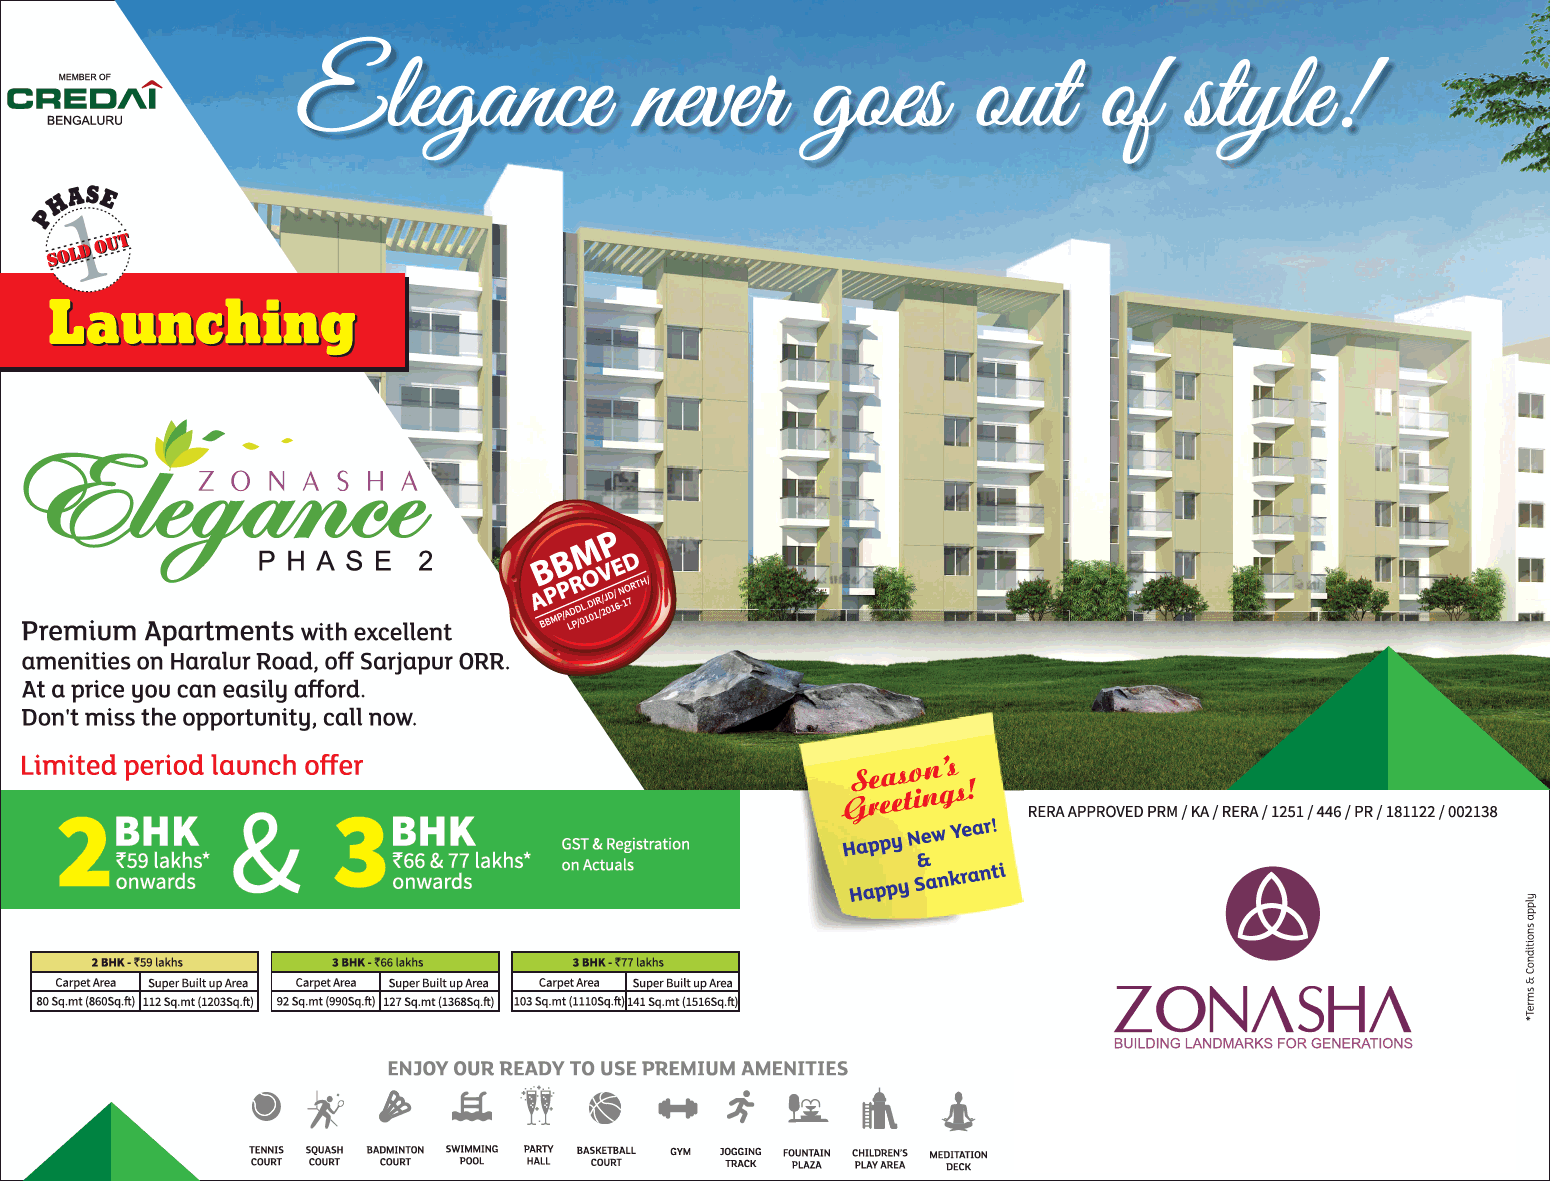 Book premium apartments with excellent amenities at Zonasha Elegance in Bangalore Update